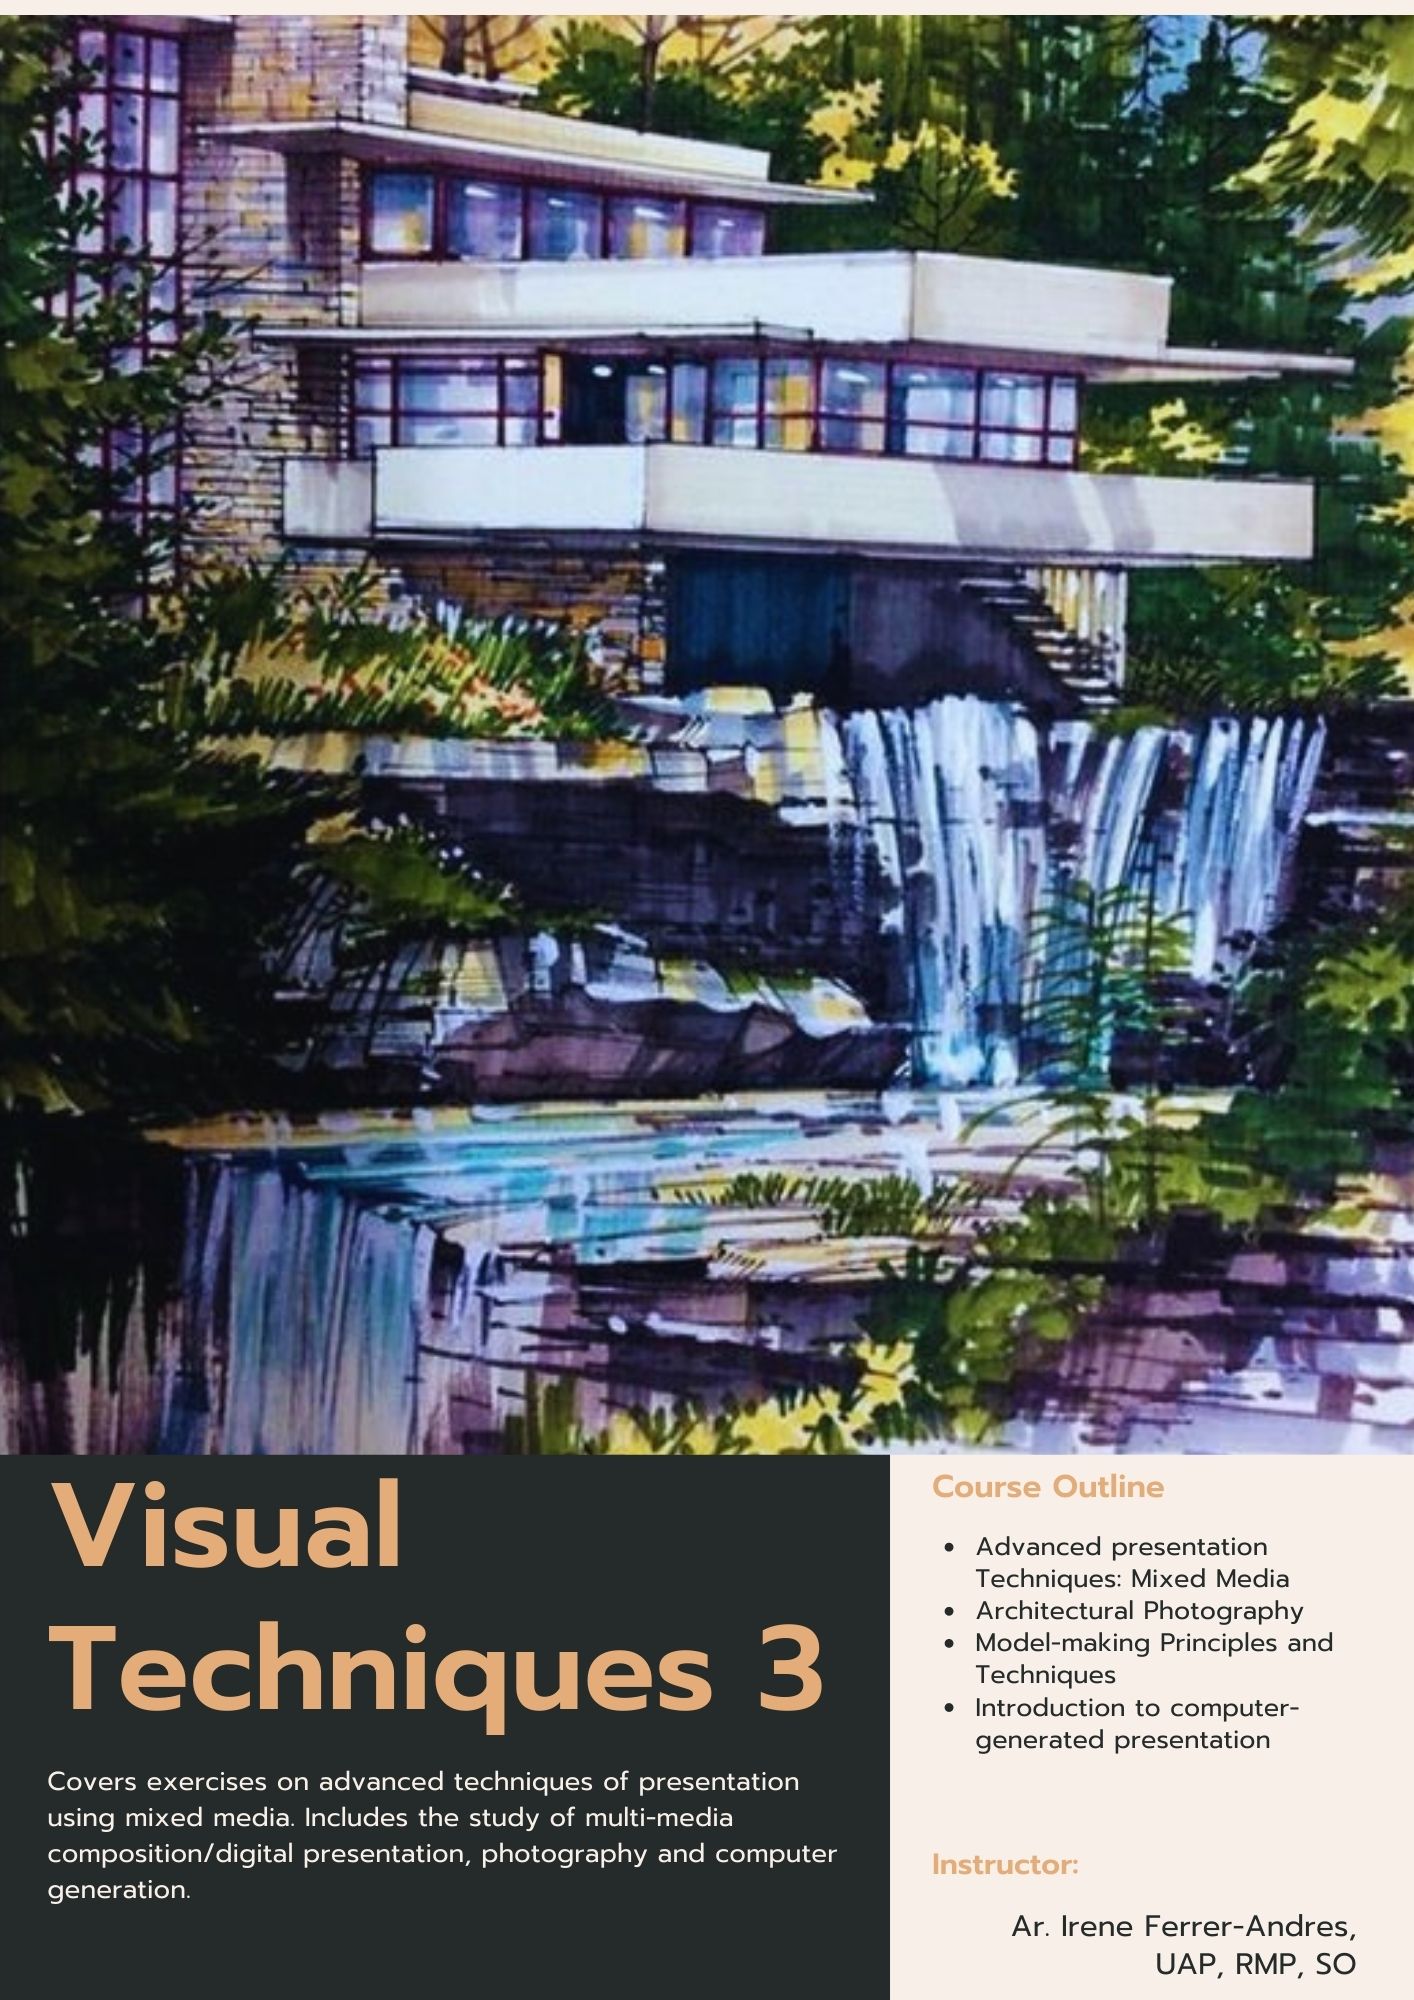 Arch'l Visual Communications 5 - Visual Techniques 3